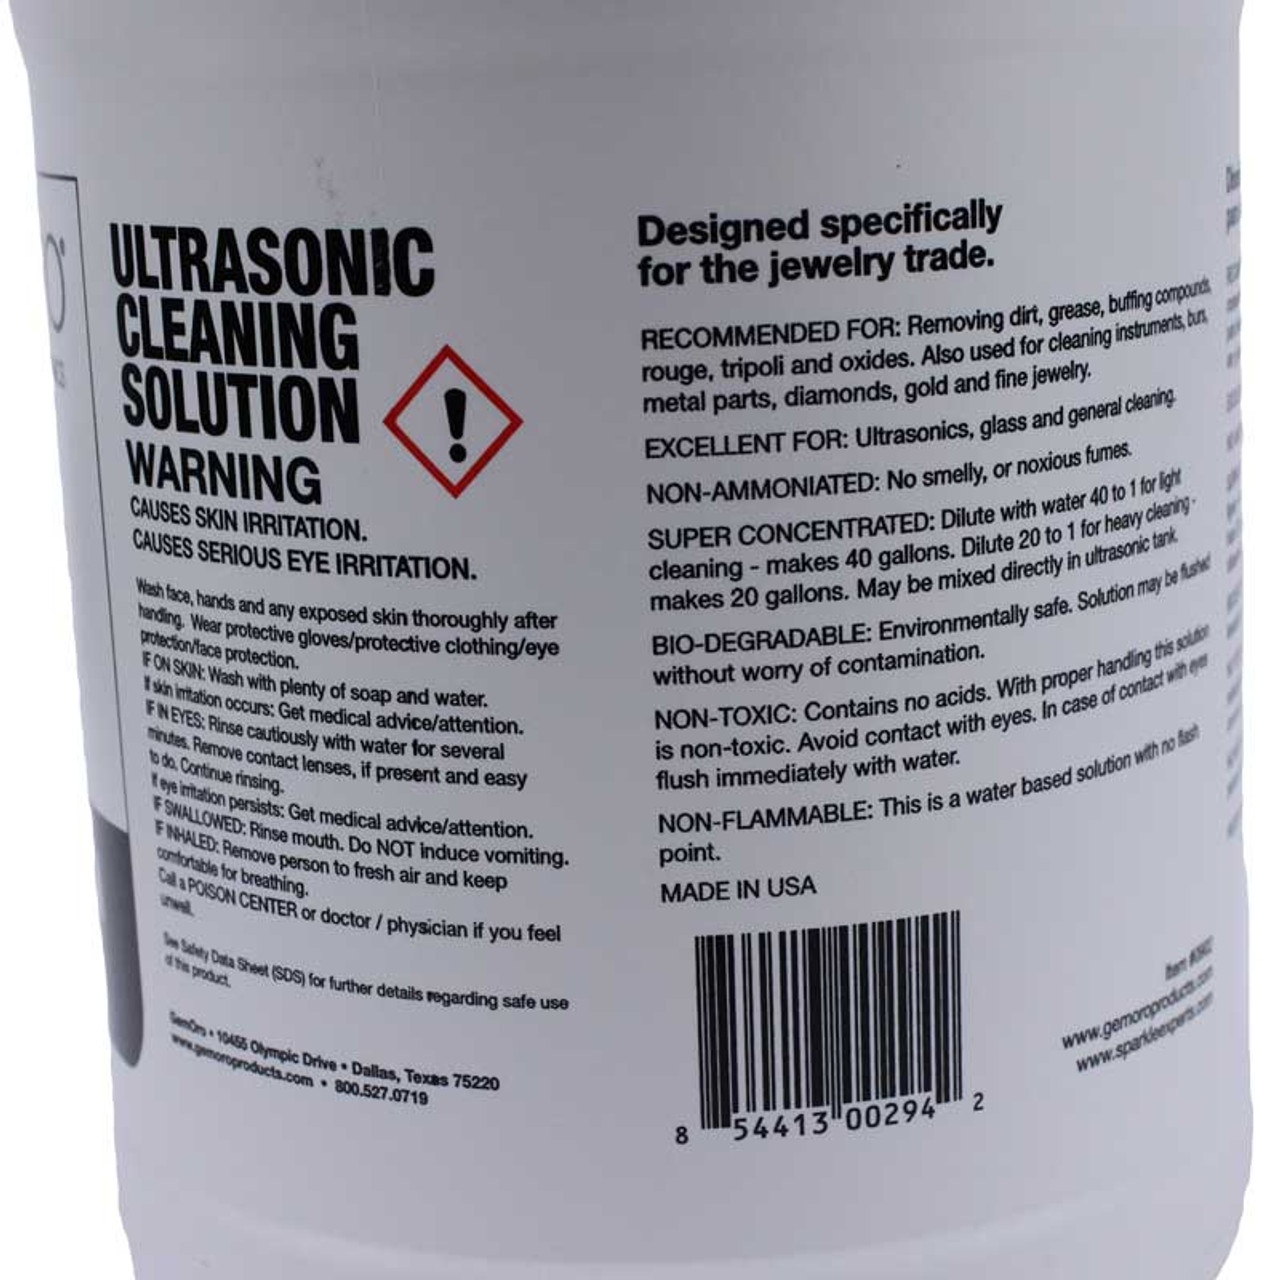 Ultrasonic Cleaner Solution